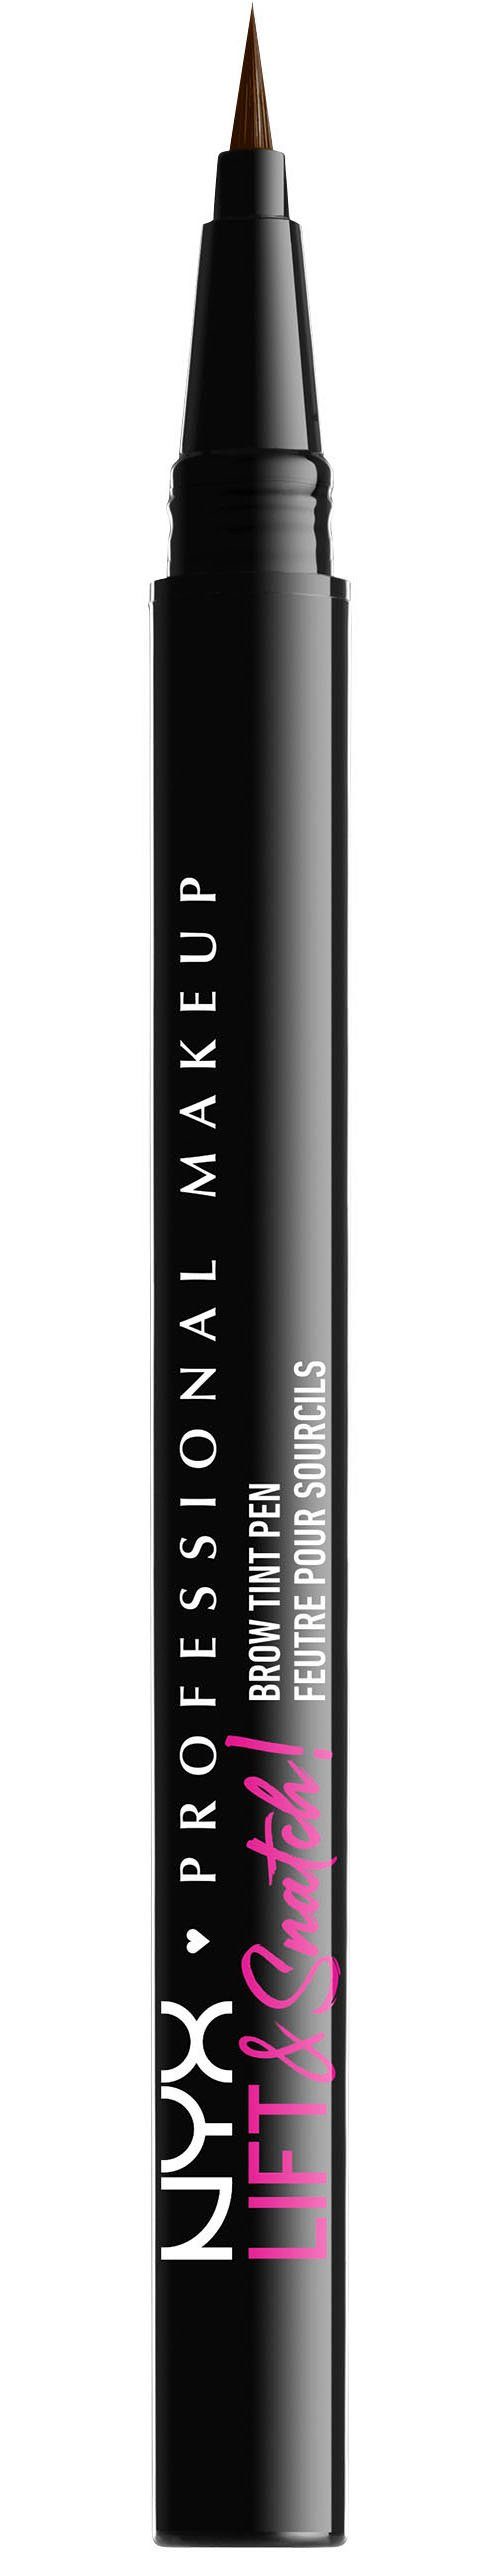 für Snatch leichte Makeup Brow & Lift Augenbrauen-Stift Flexible Tint NYX Professional Micro-Spitze Pen, Handhabung